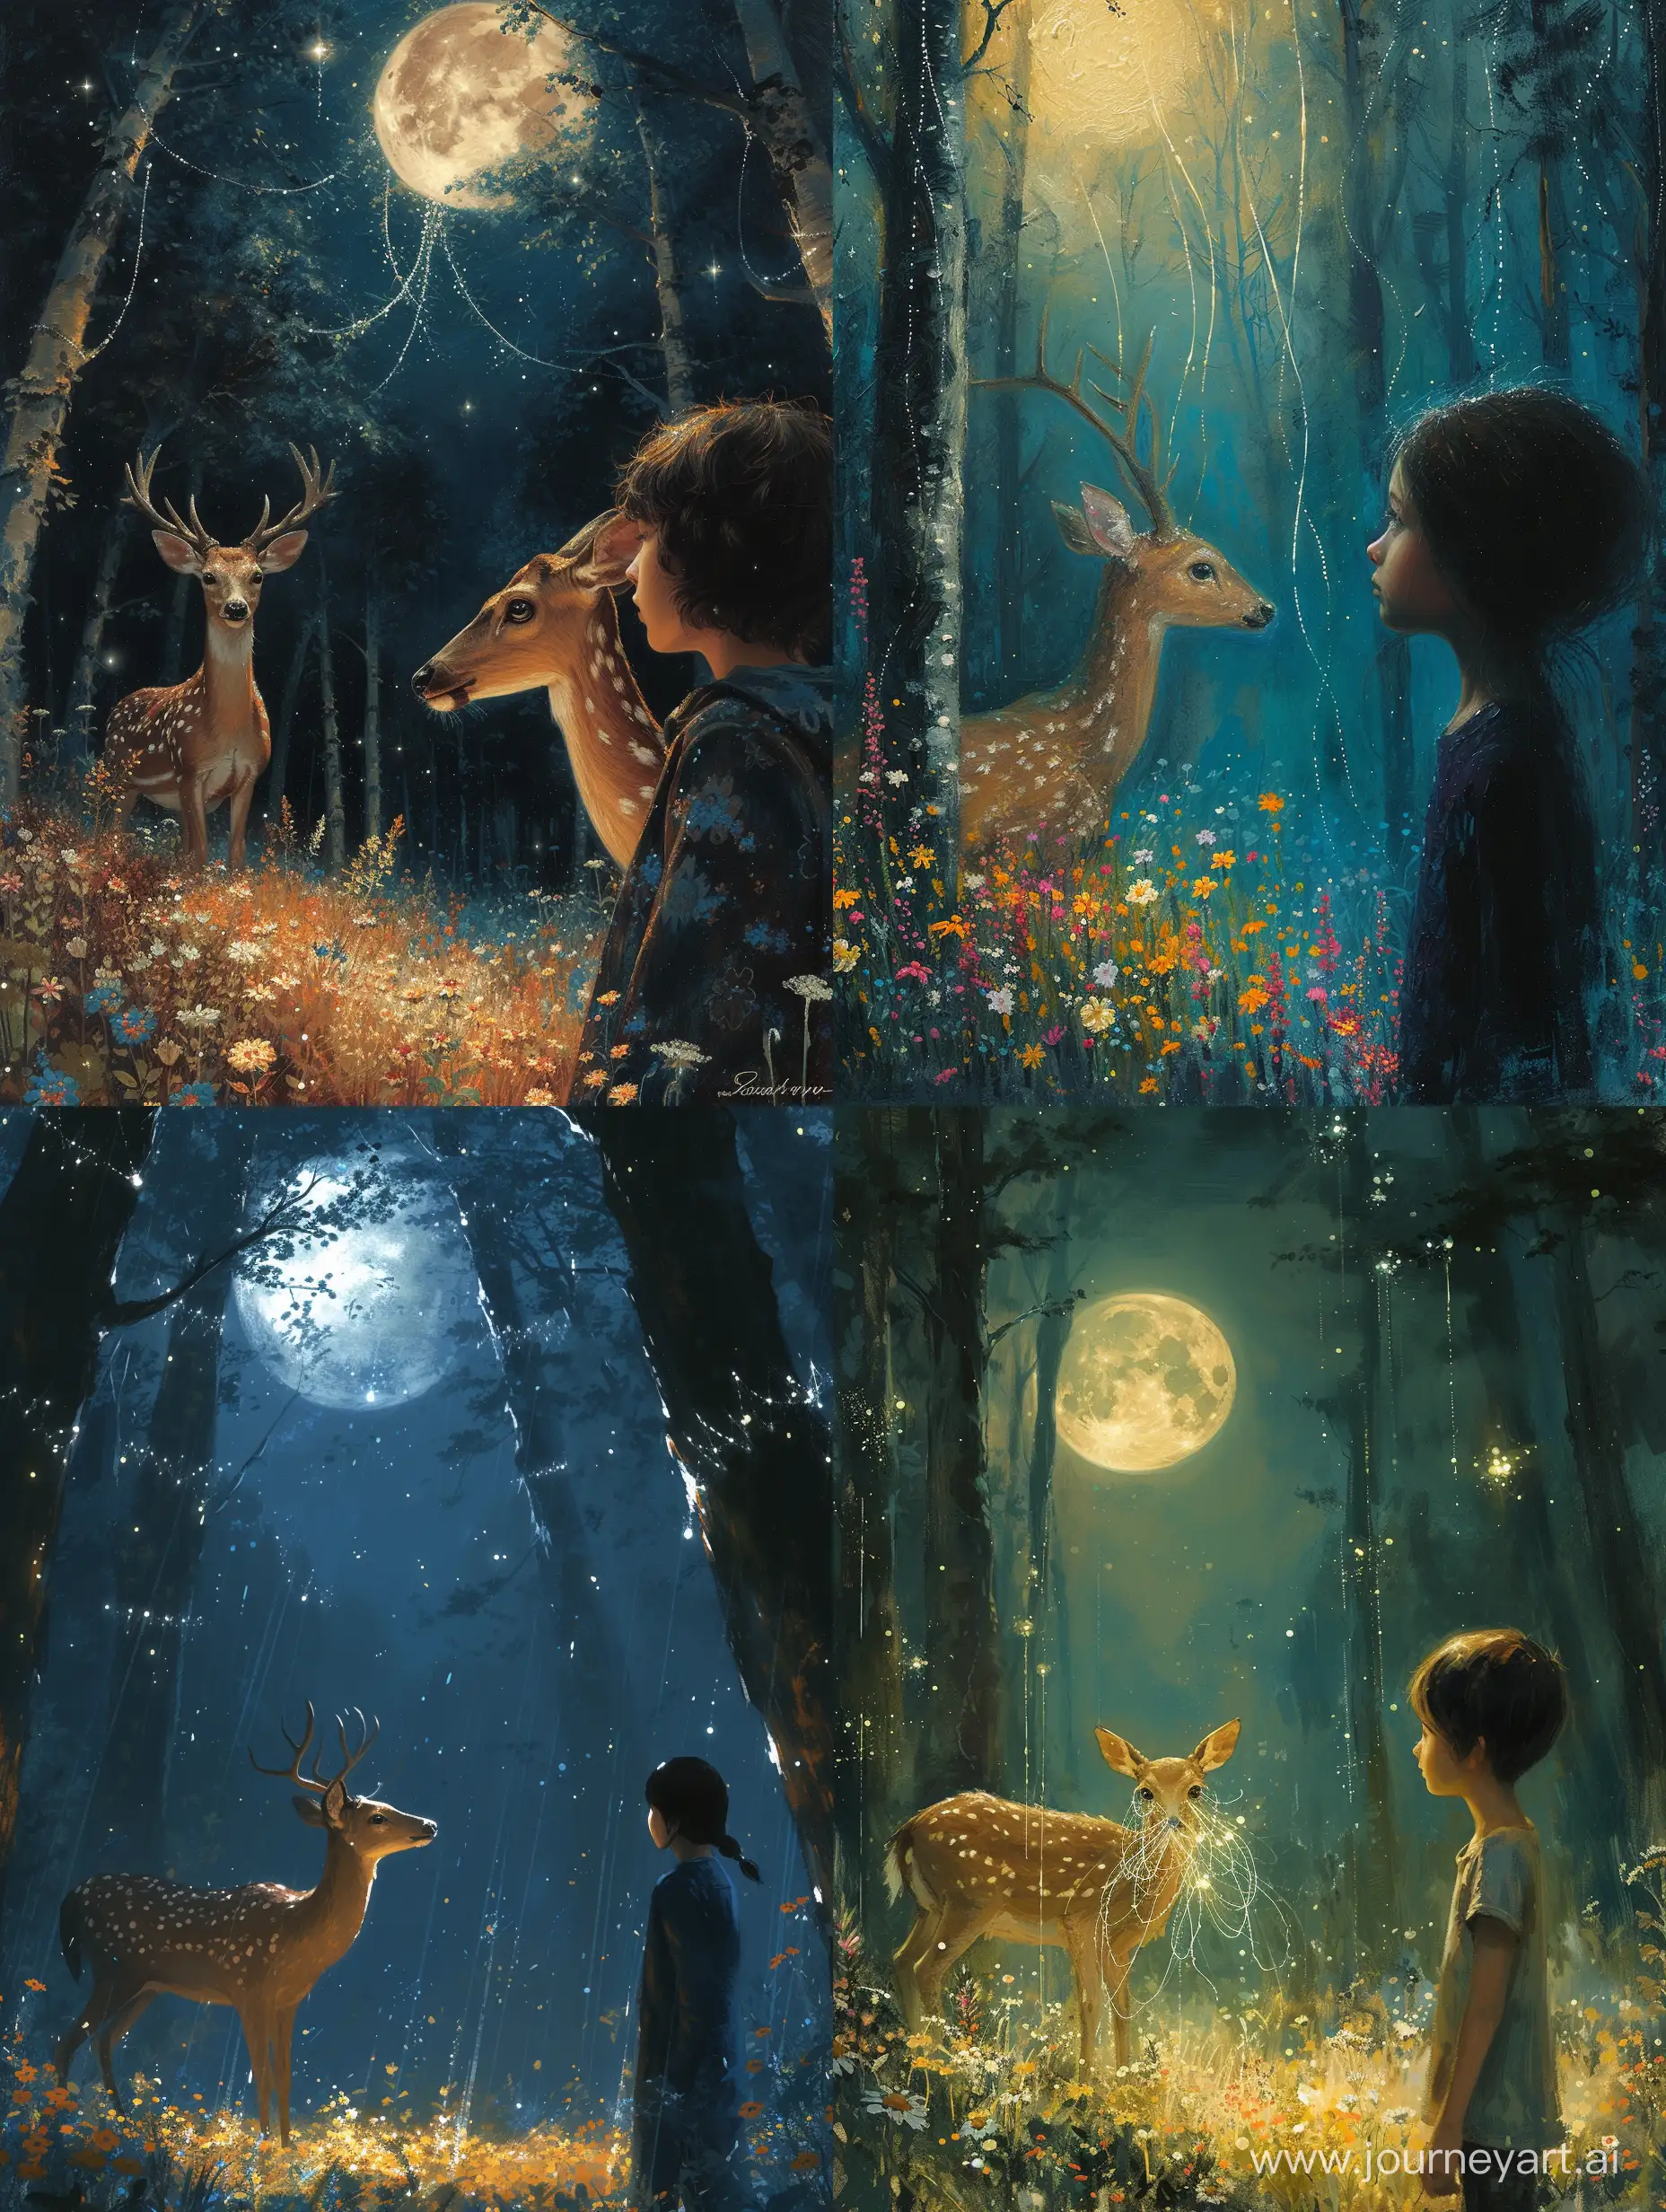 Moonlit-Forest-Encounter-Graceful-Deer-and-Enchanted-Figure